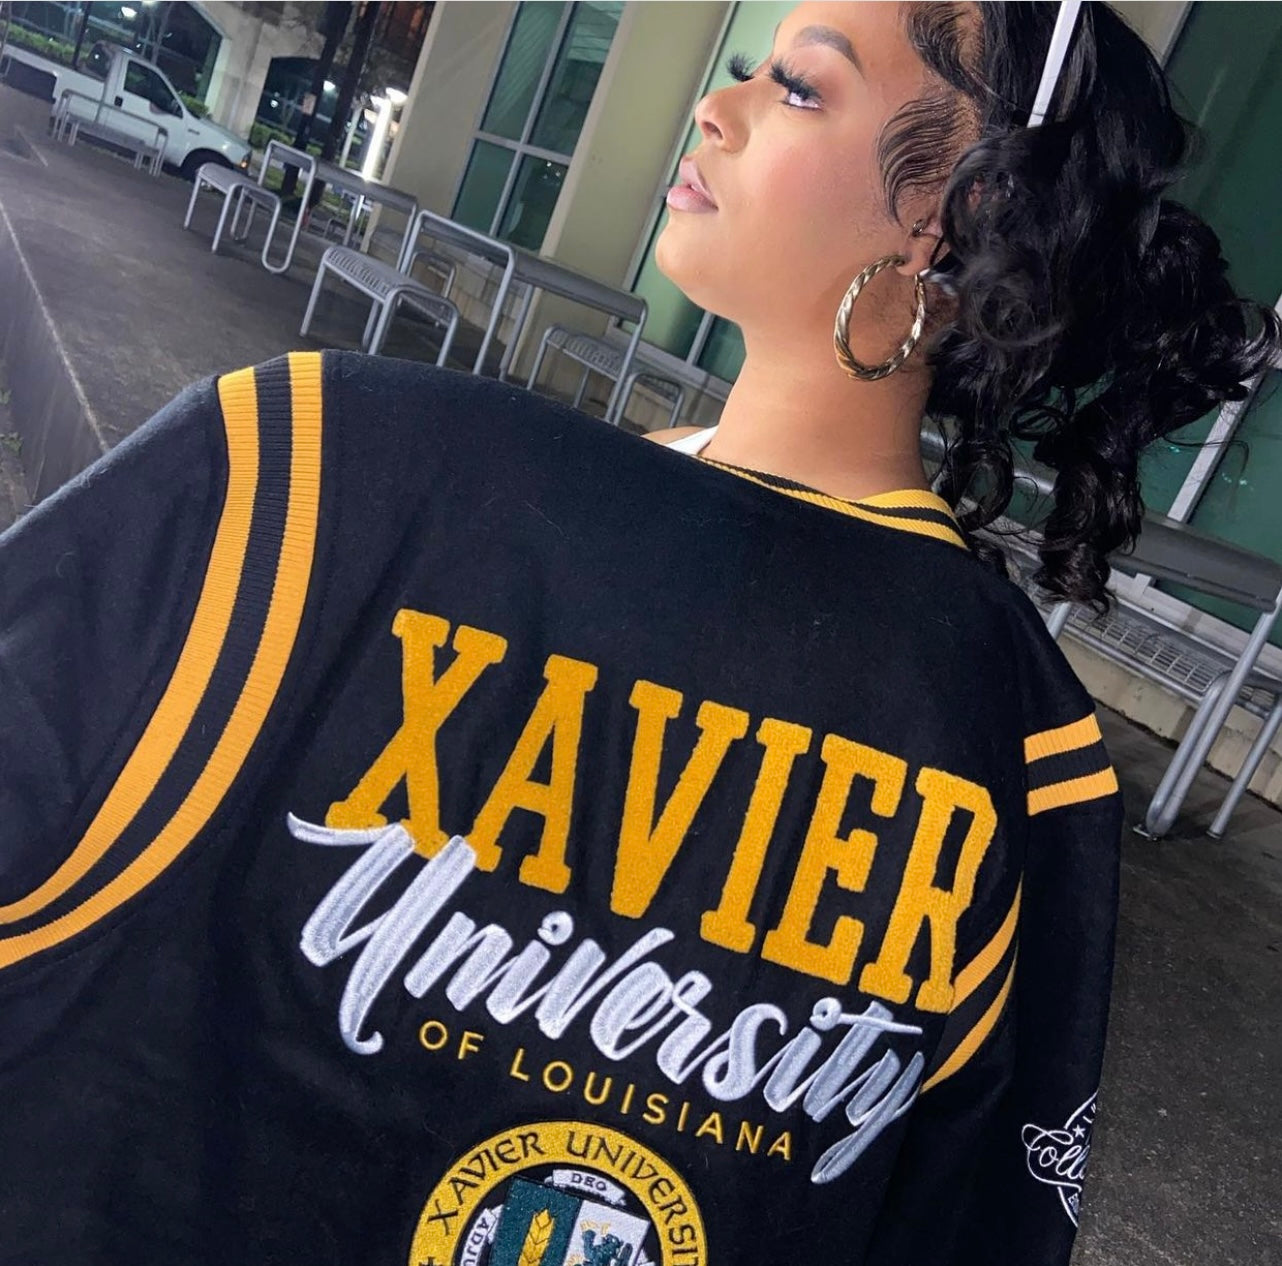 Thegenuineleather Xavier University of Louisiana Jacket 